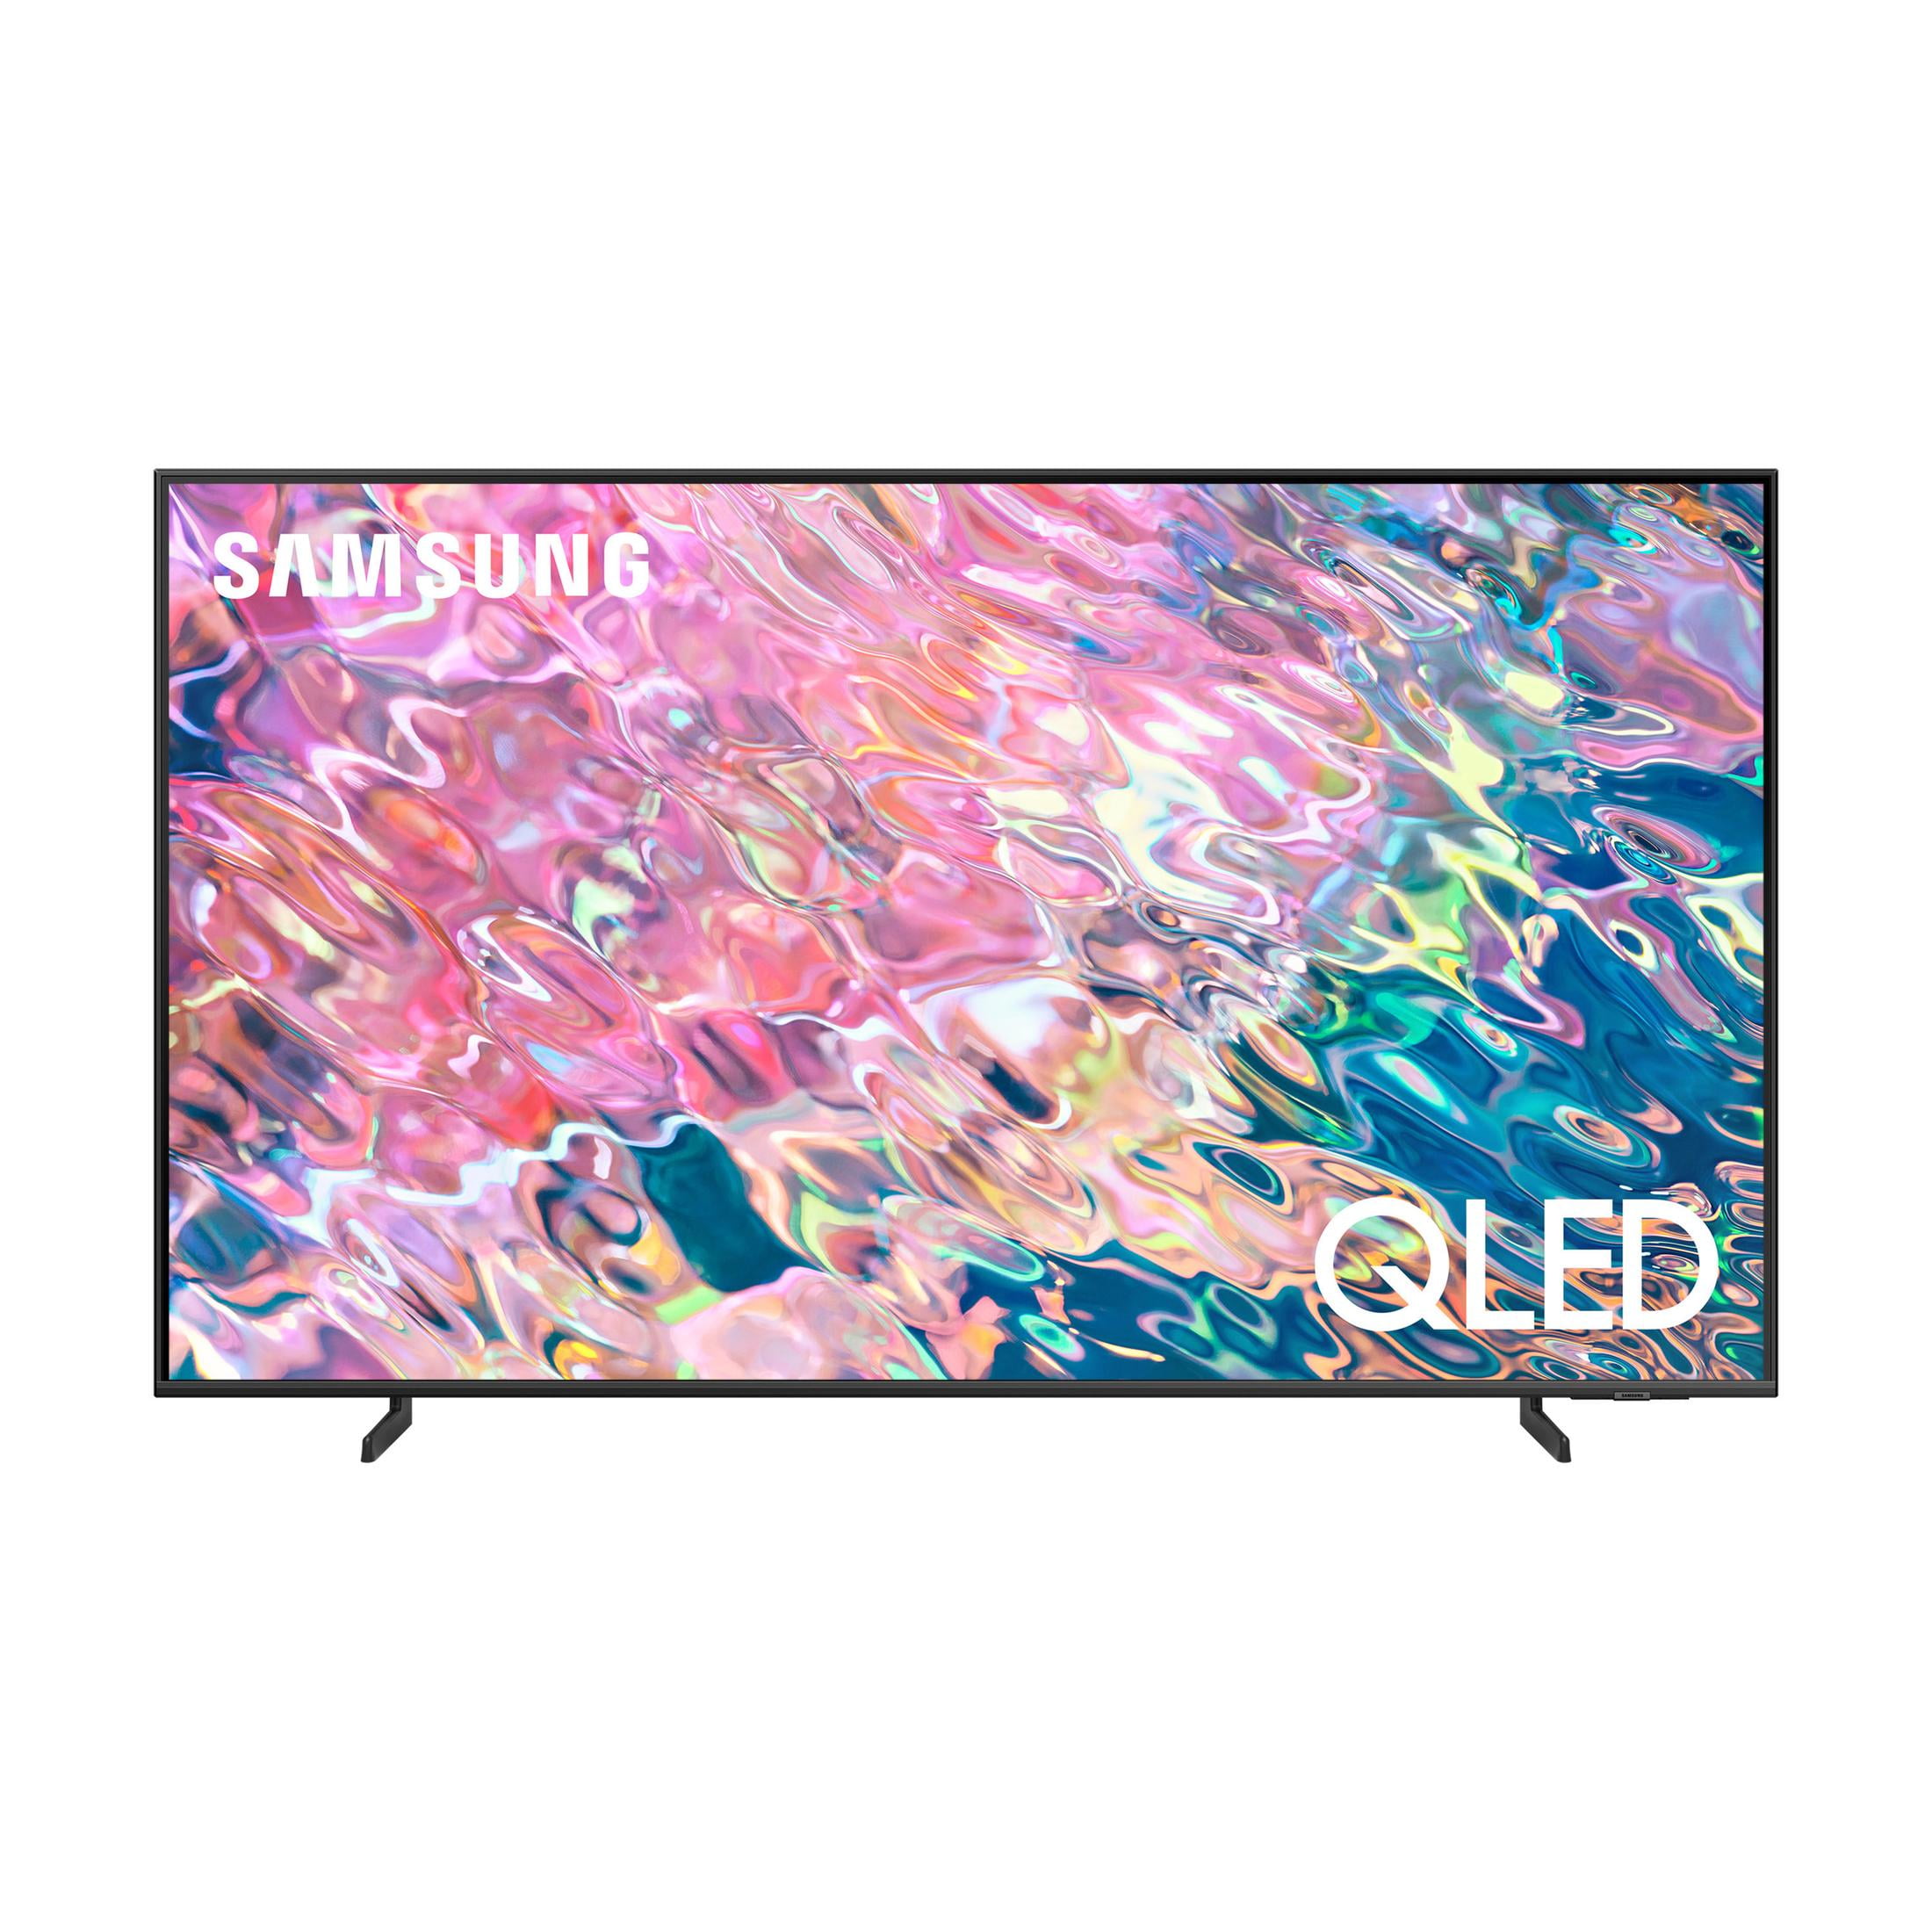 Pantalla Samsung LED Smart TV de 40 pulgadas Full HD UN40N5200AFXZA